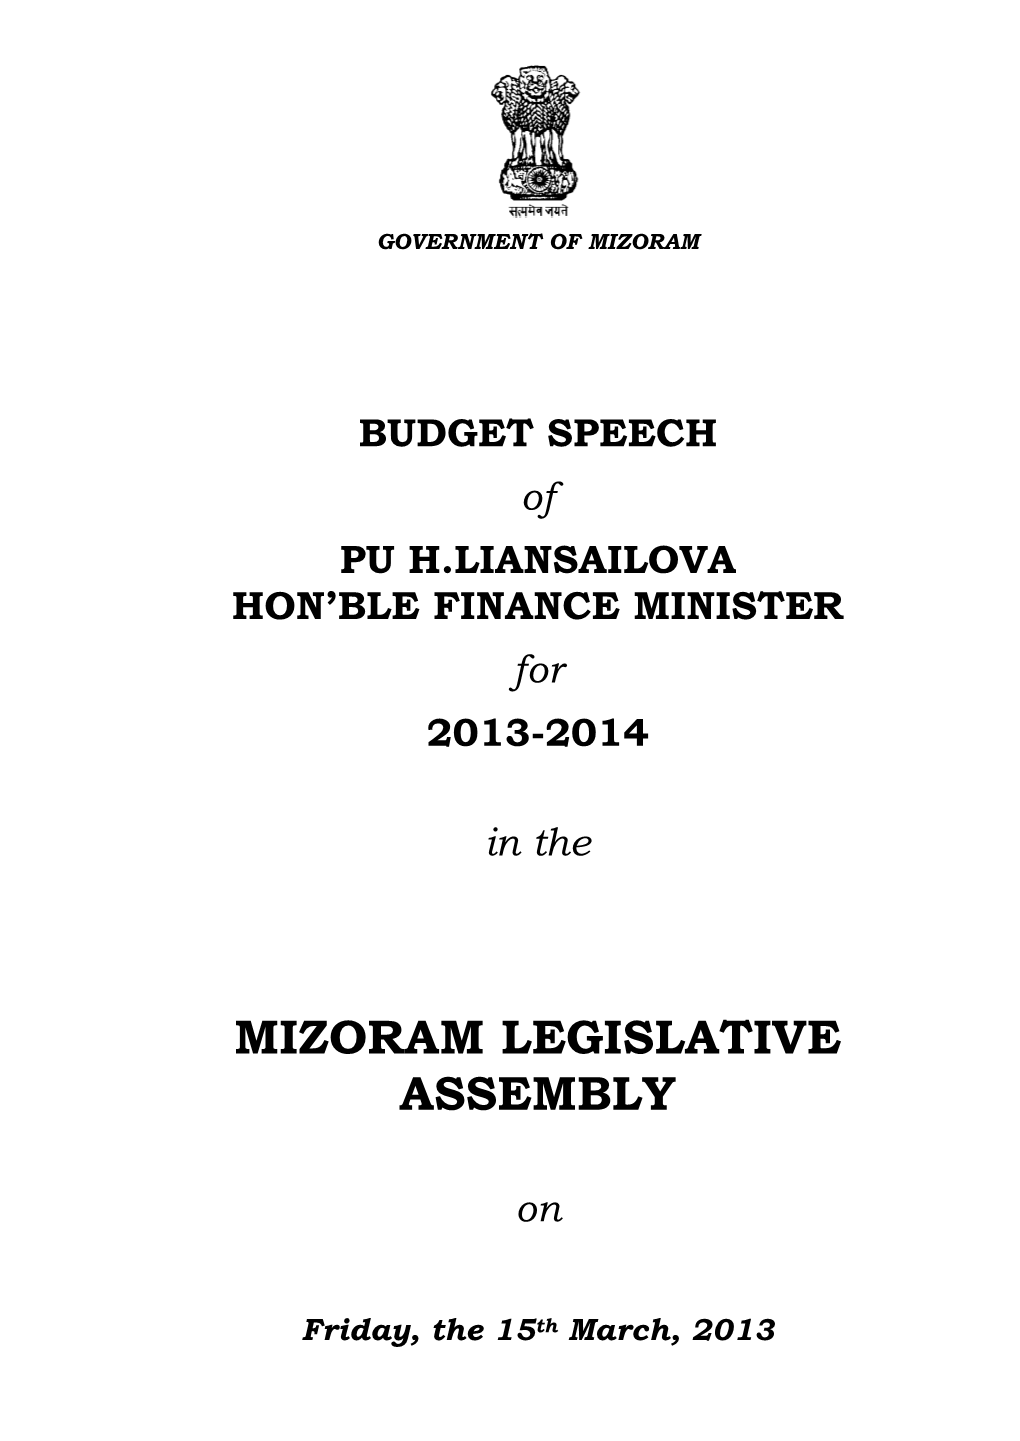 Mizoram Legislative Assembly